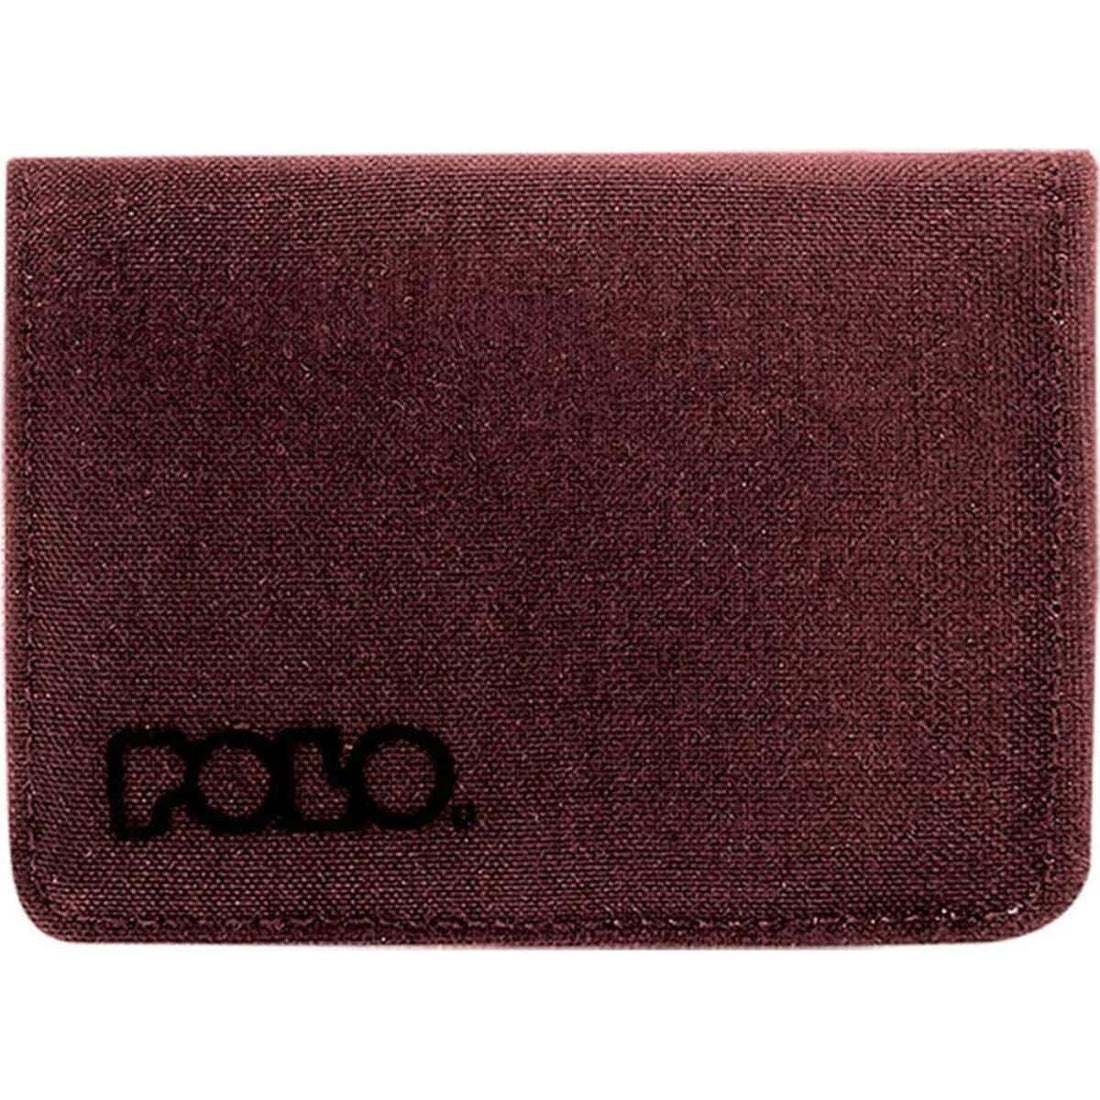 Polo Πορτοφολι Wallet Rfid Small